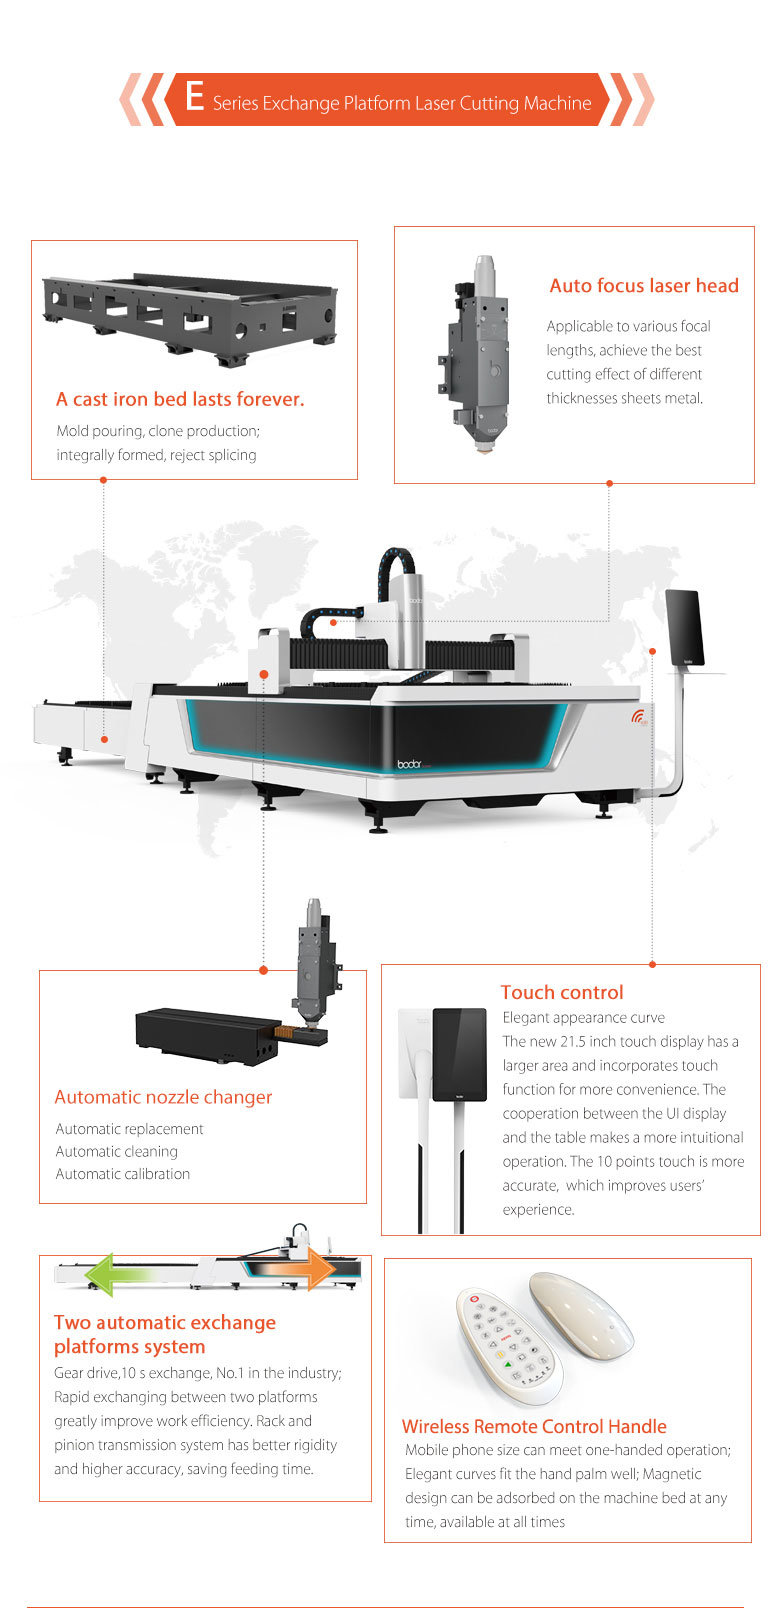 Bodor E3015 Stainless Iron Pipe Cutter/Metal Laser Cutting Machine